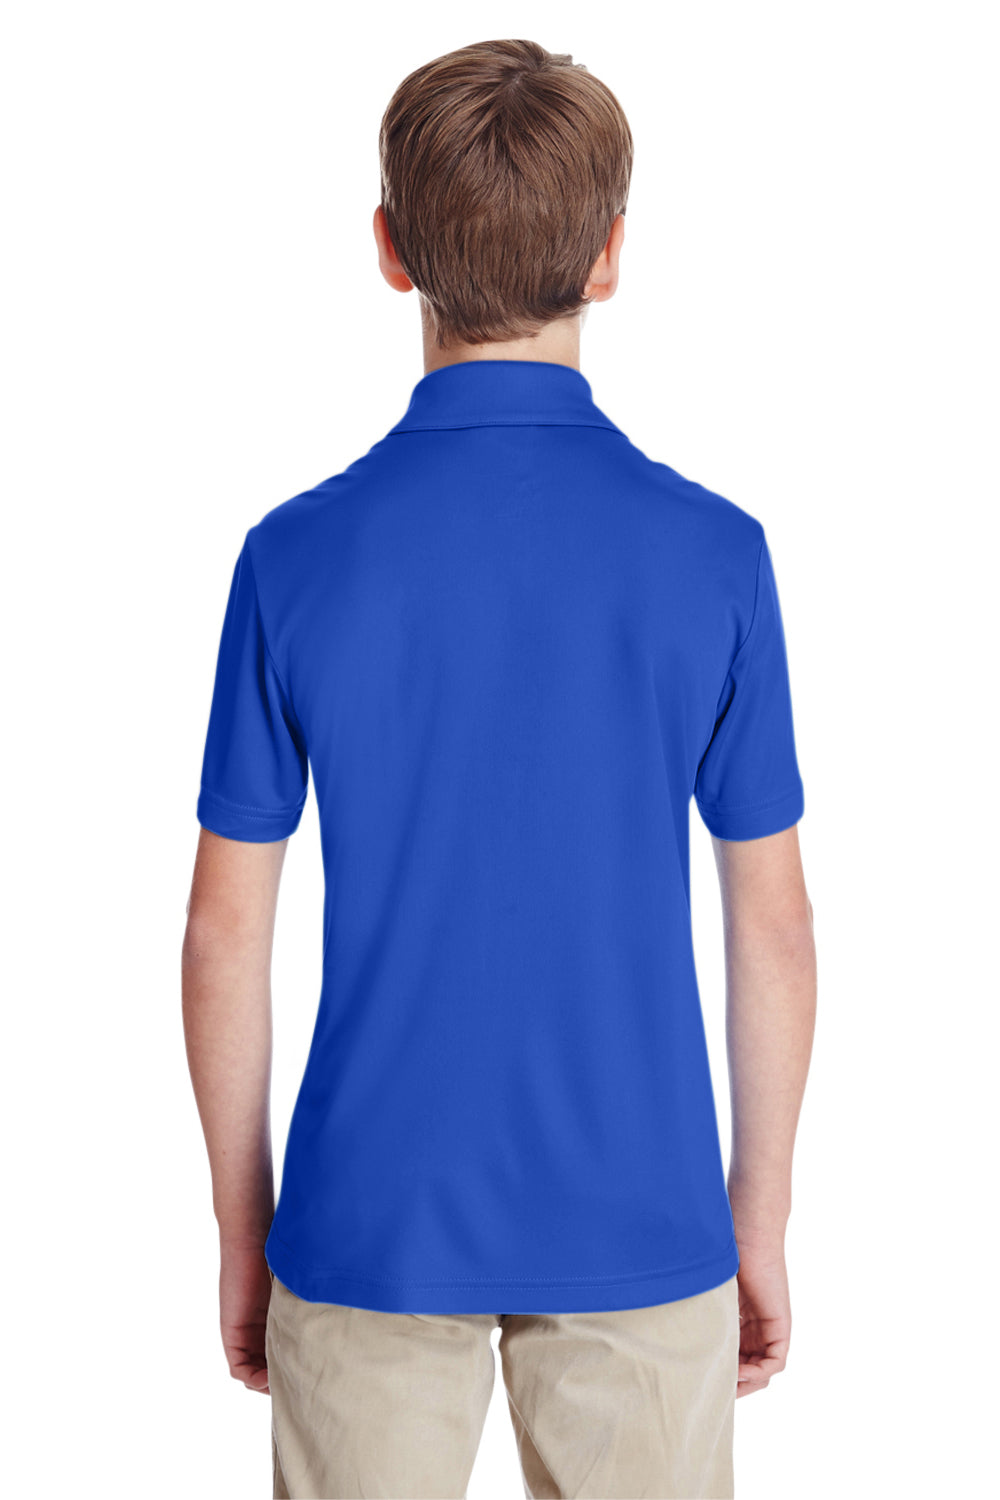 Team 365 TT51Y Youth Zone Performance Moisture Wicking Short Sleeve Polo Shirt Royal Blue Back